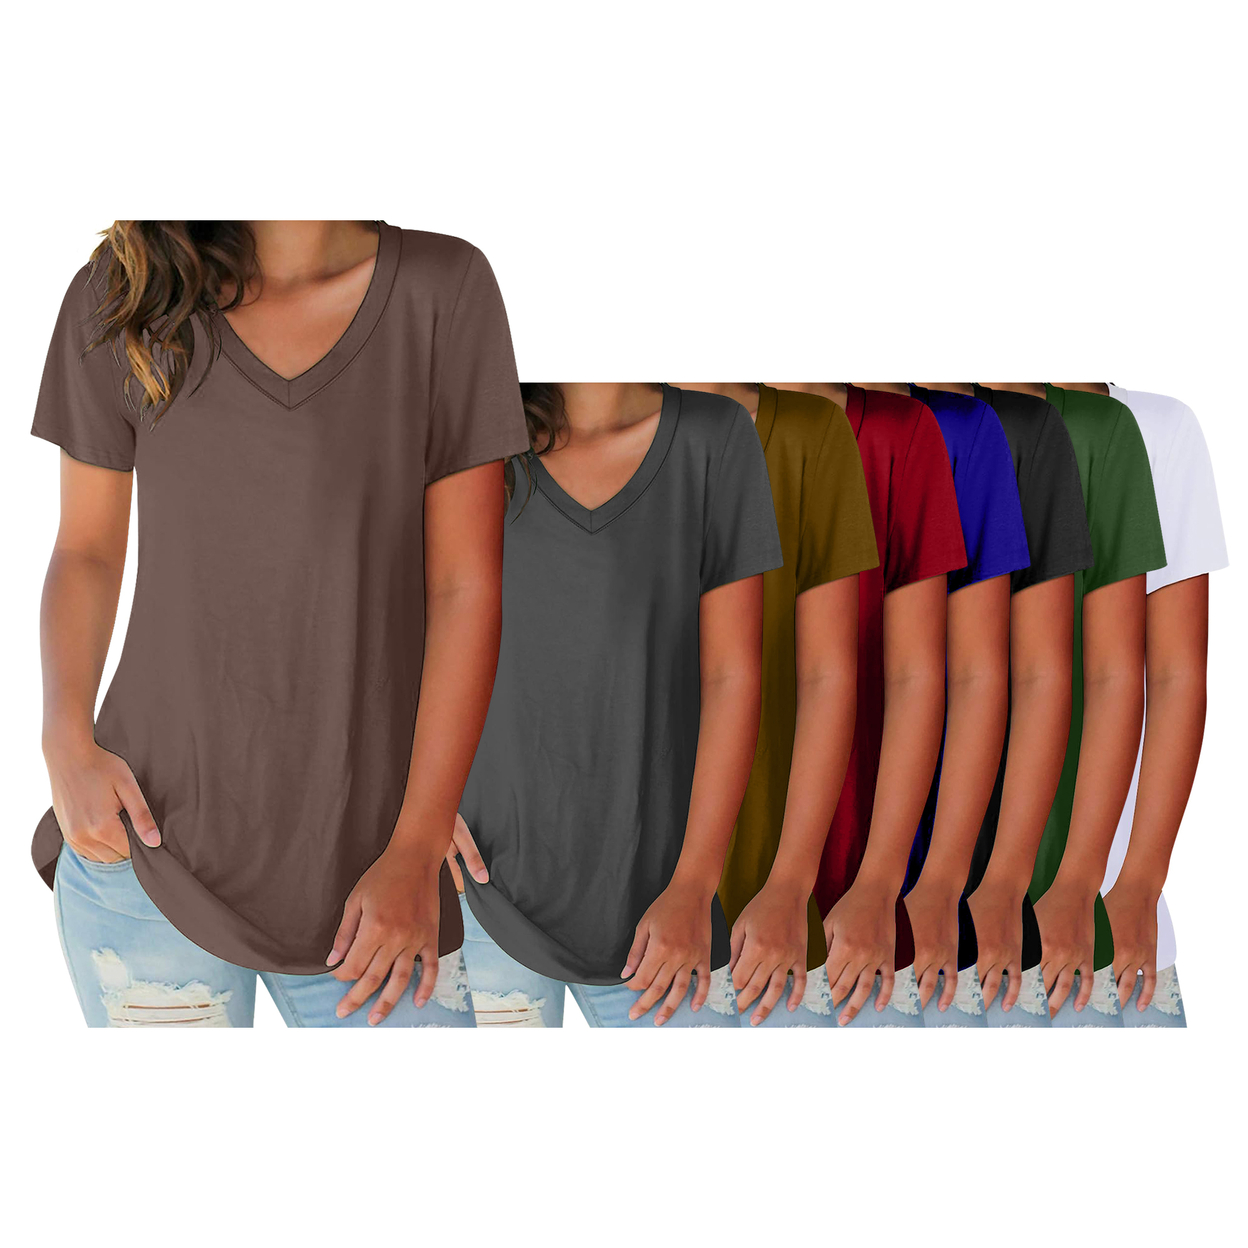 3-Pack: Women's Ultra Soft Smooth Cotton Blend Basic V-Neck Short Sleeve Shirts - Black, White Mustard, Medium